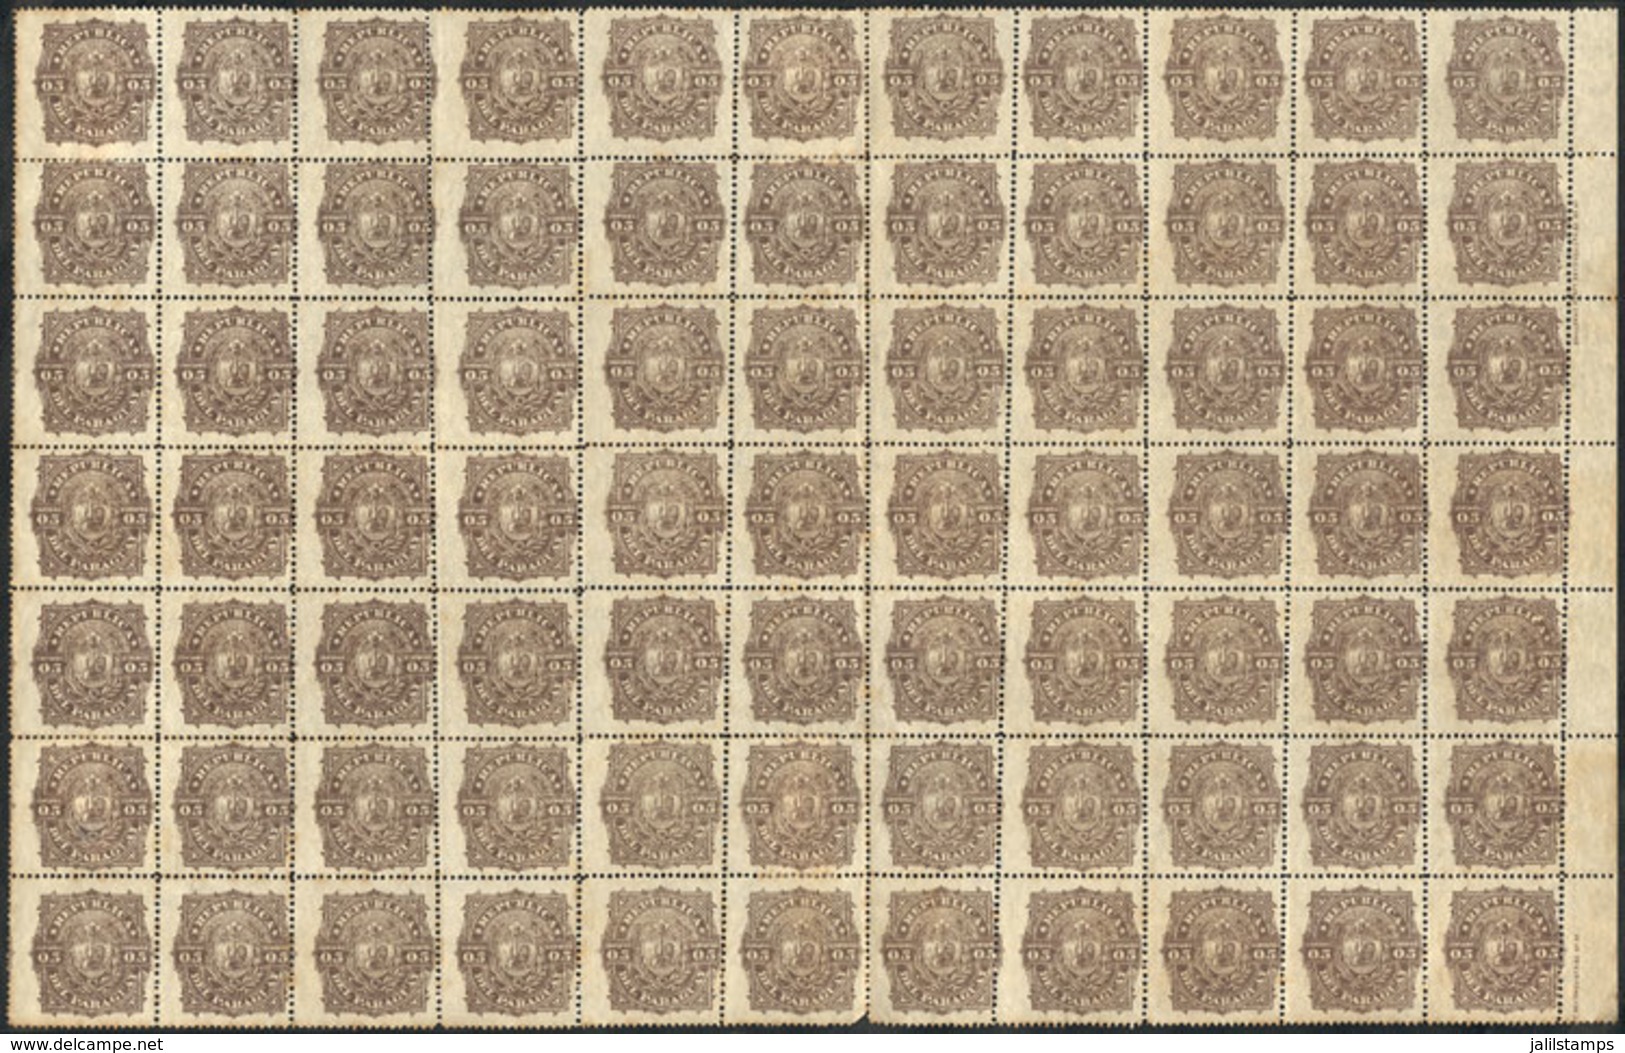 PARAGUAY: Year 1883 5c. Brown, Large Block Of 77 Revenue Stamps, Fantastic! - Paraguay